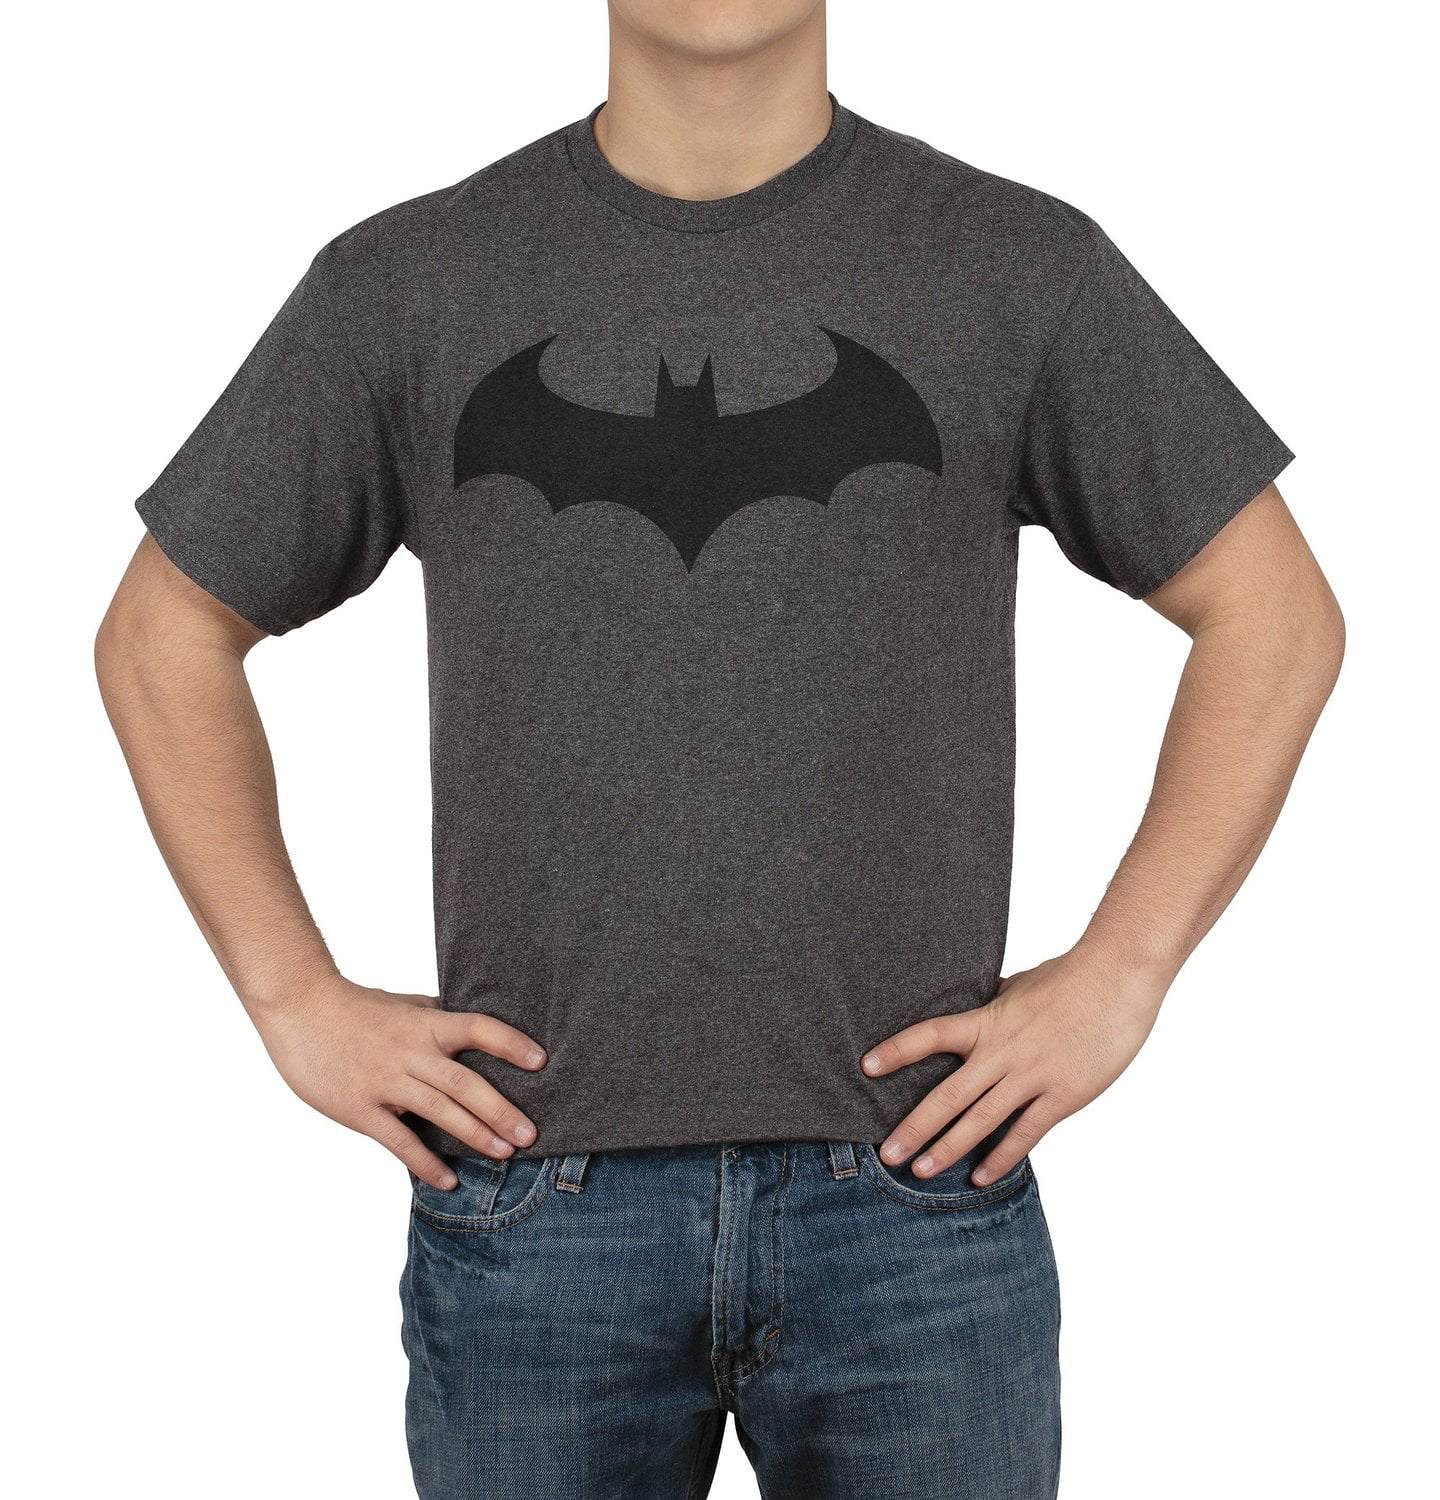 Dark Knight Movie Fan T-Shirt Adults Unisex T-Shirts Funny Way to Say BATMAN 